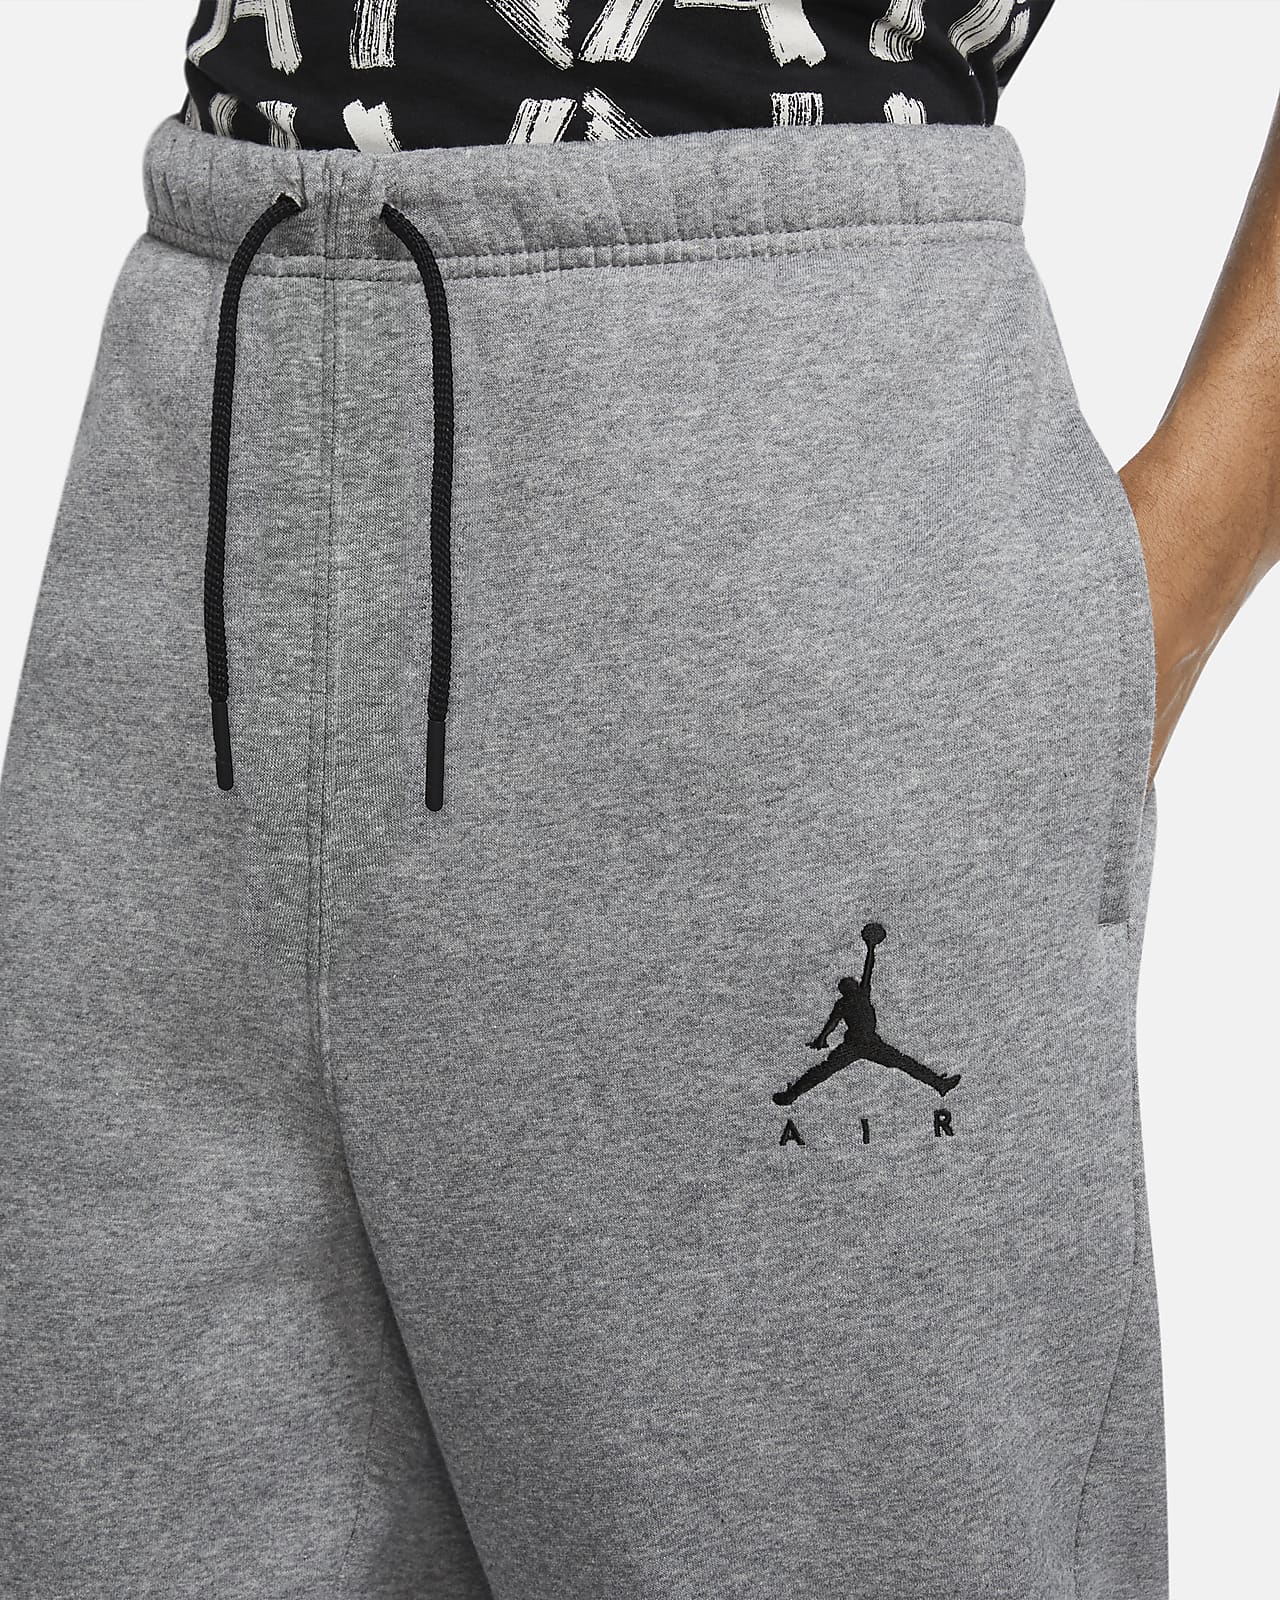 Jordan Jumpman Air Men's Fleece Pants 